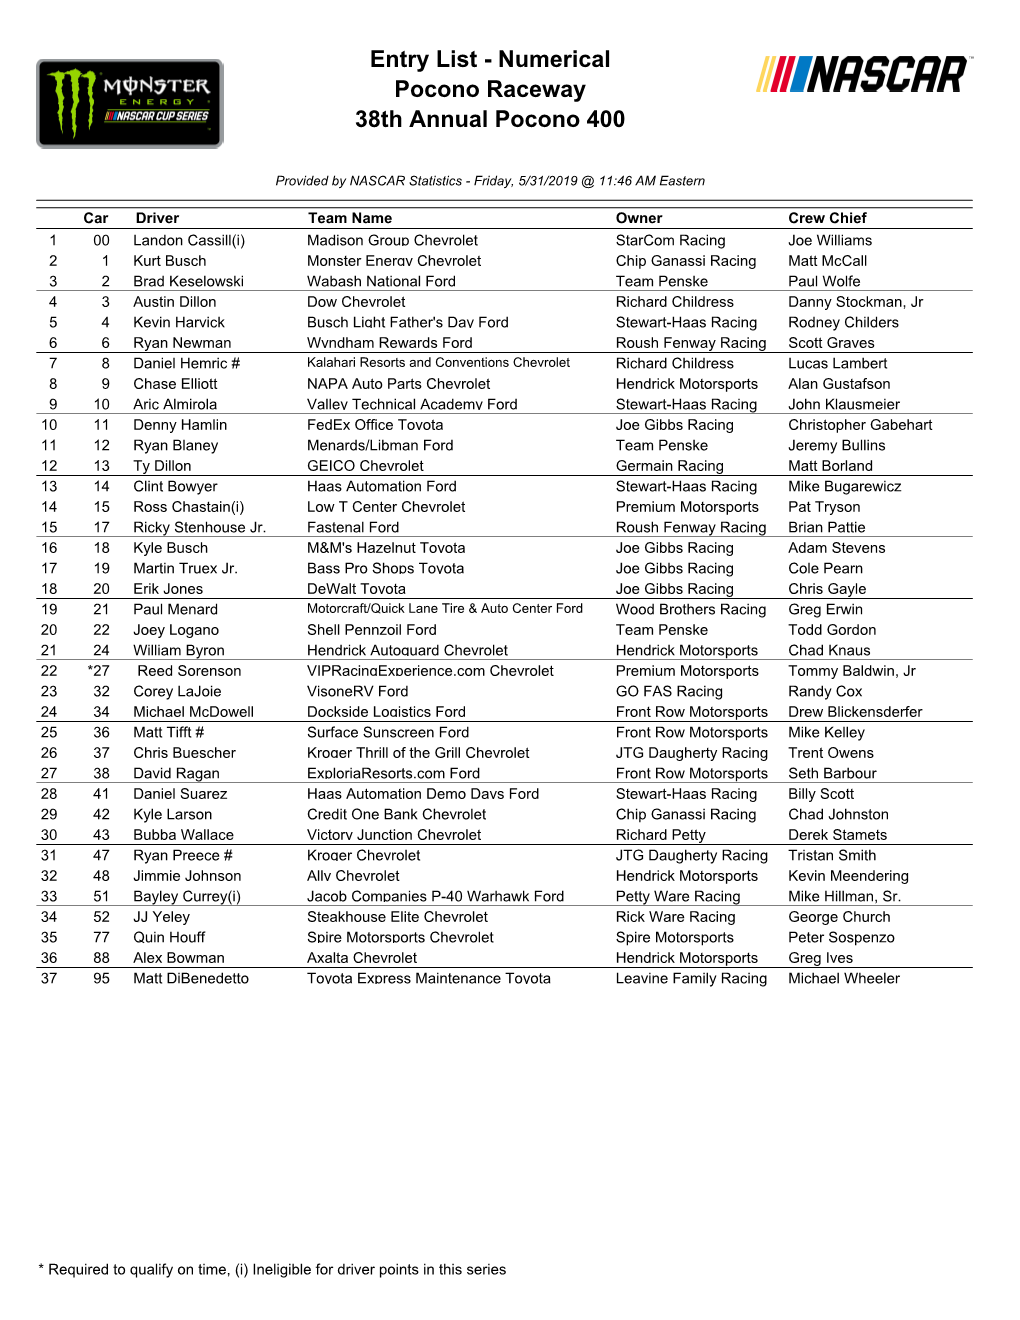 Entry List - Numerical Pocono Raceway 38Th Annual Pocono 400